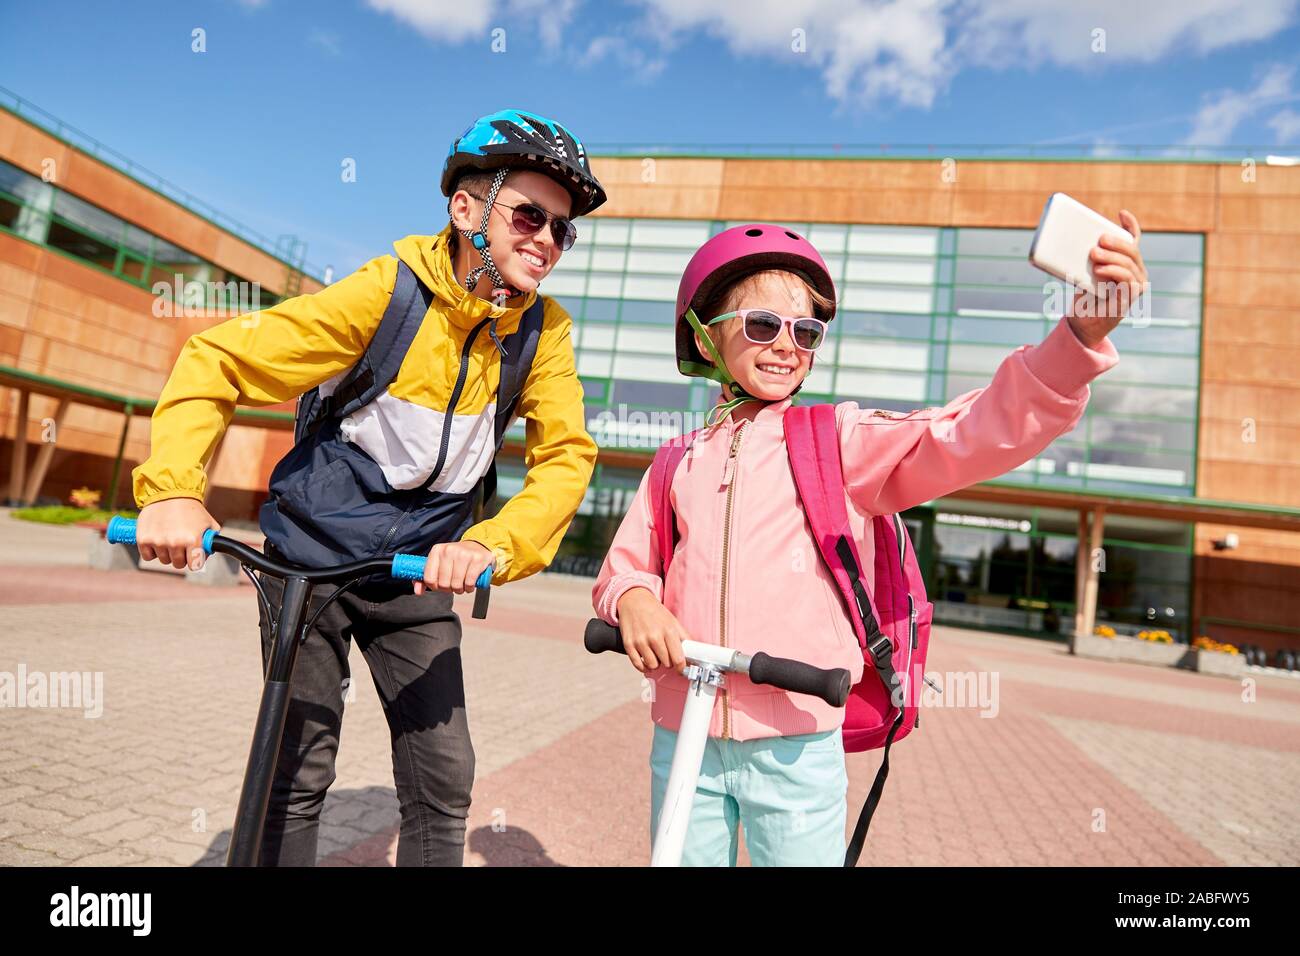 happy school kids with scooters taking selfie Stock Photo